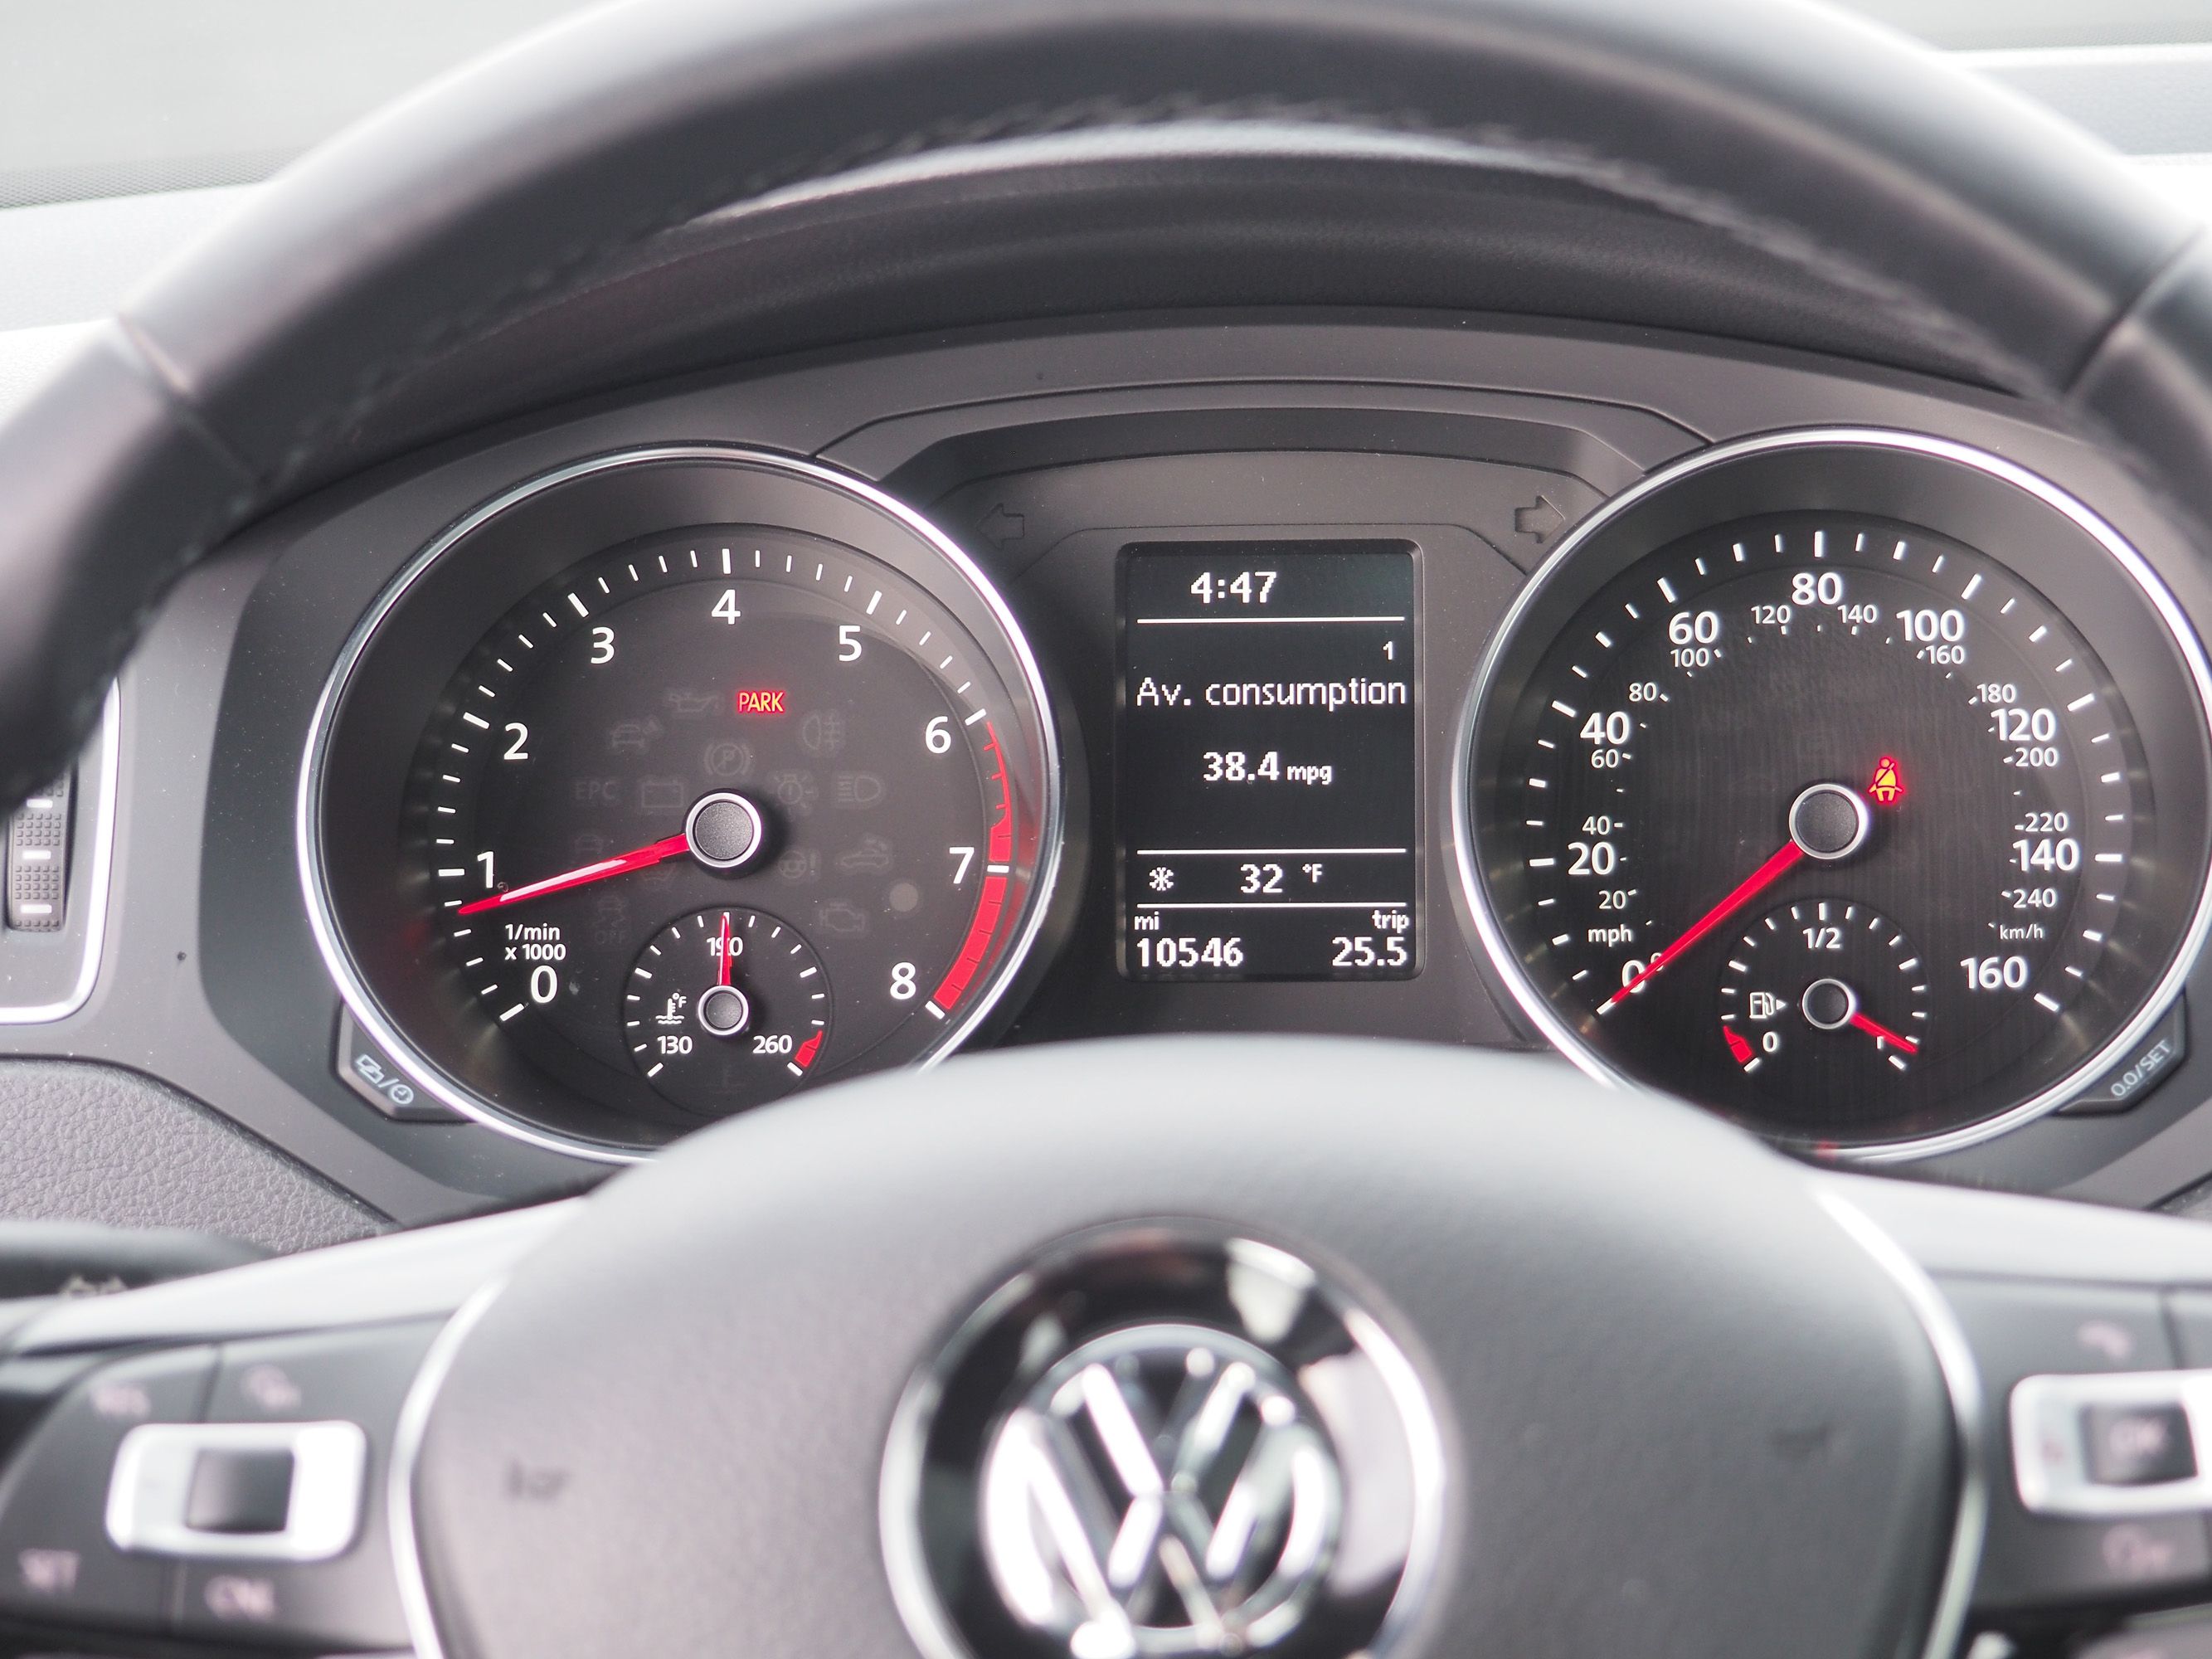 2017 Volkswagen Jetta SE - Driven